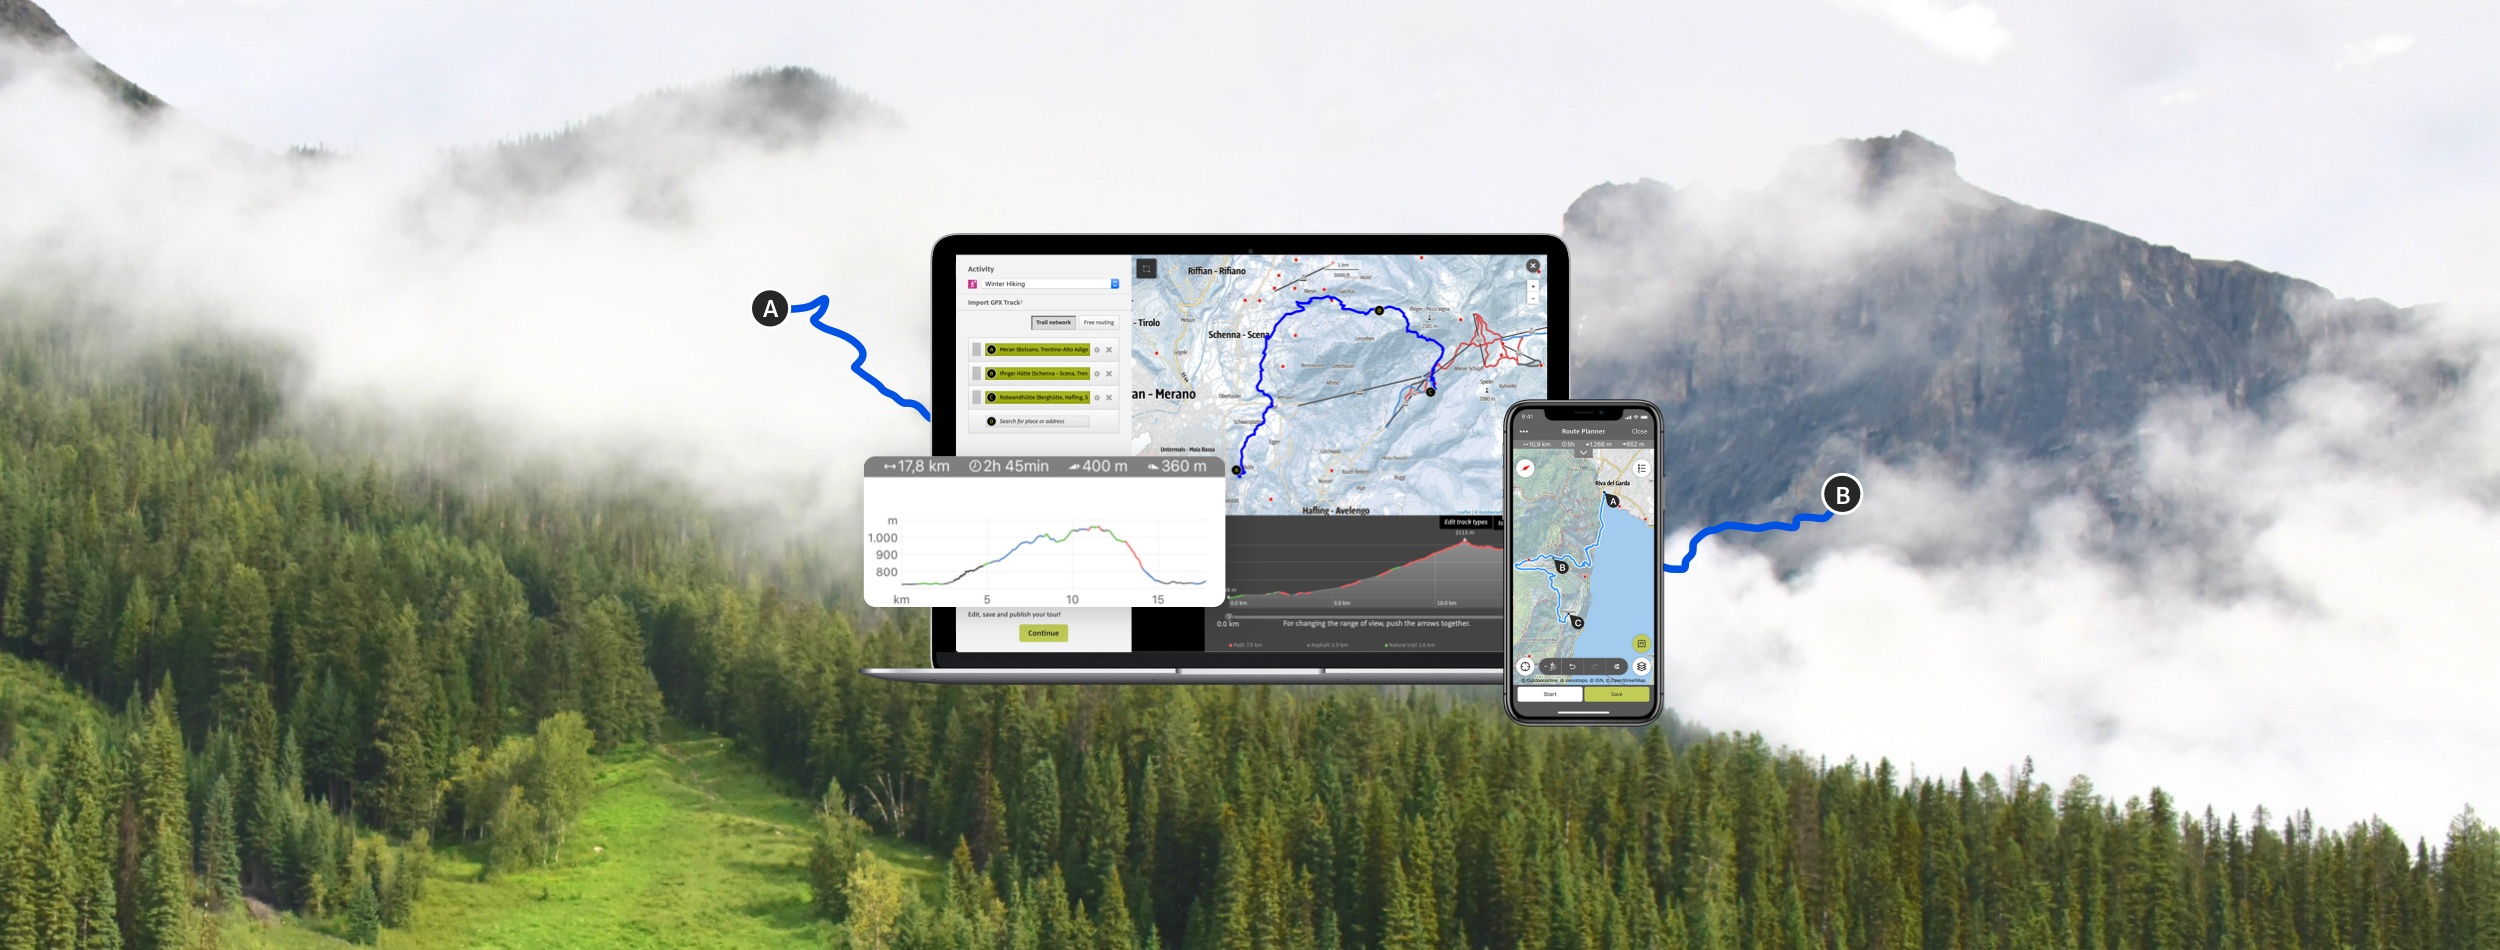 est Navigation Apps For Outdoor Adventuring